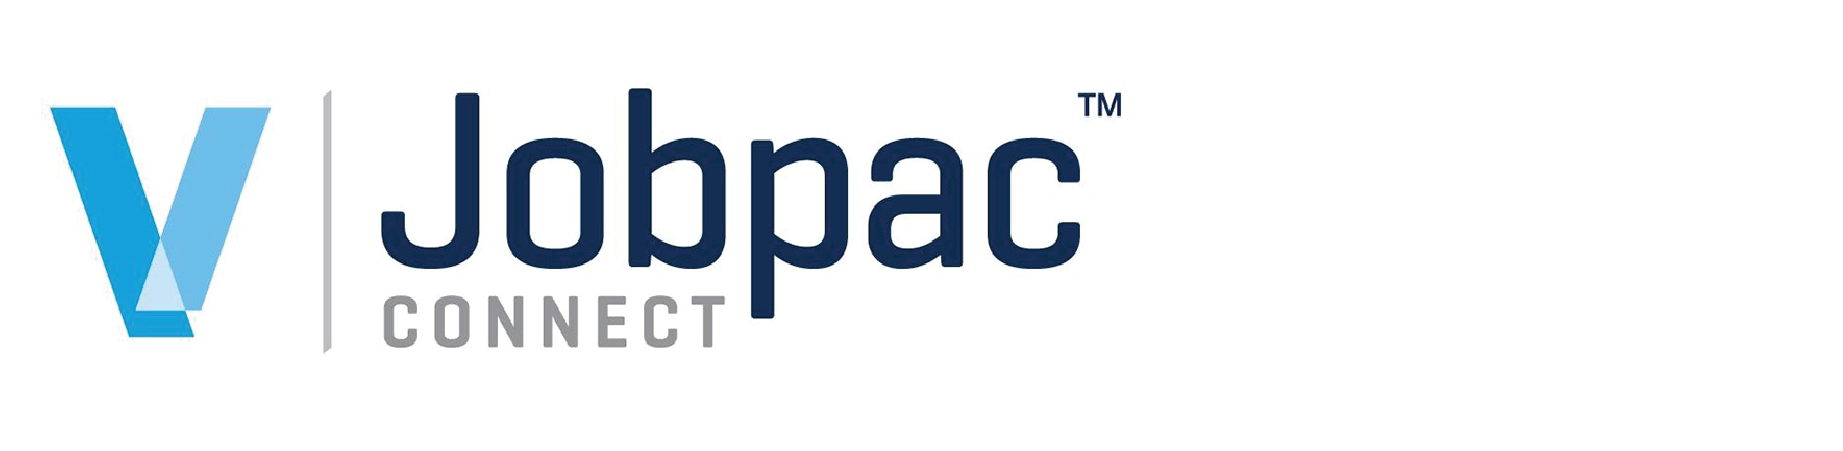 jobpac connect logo